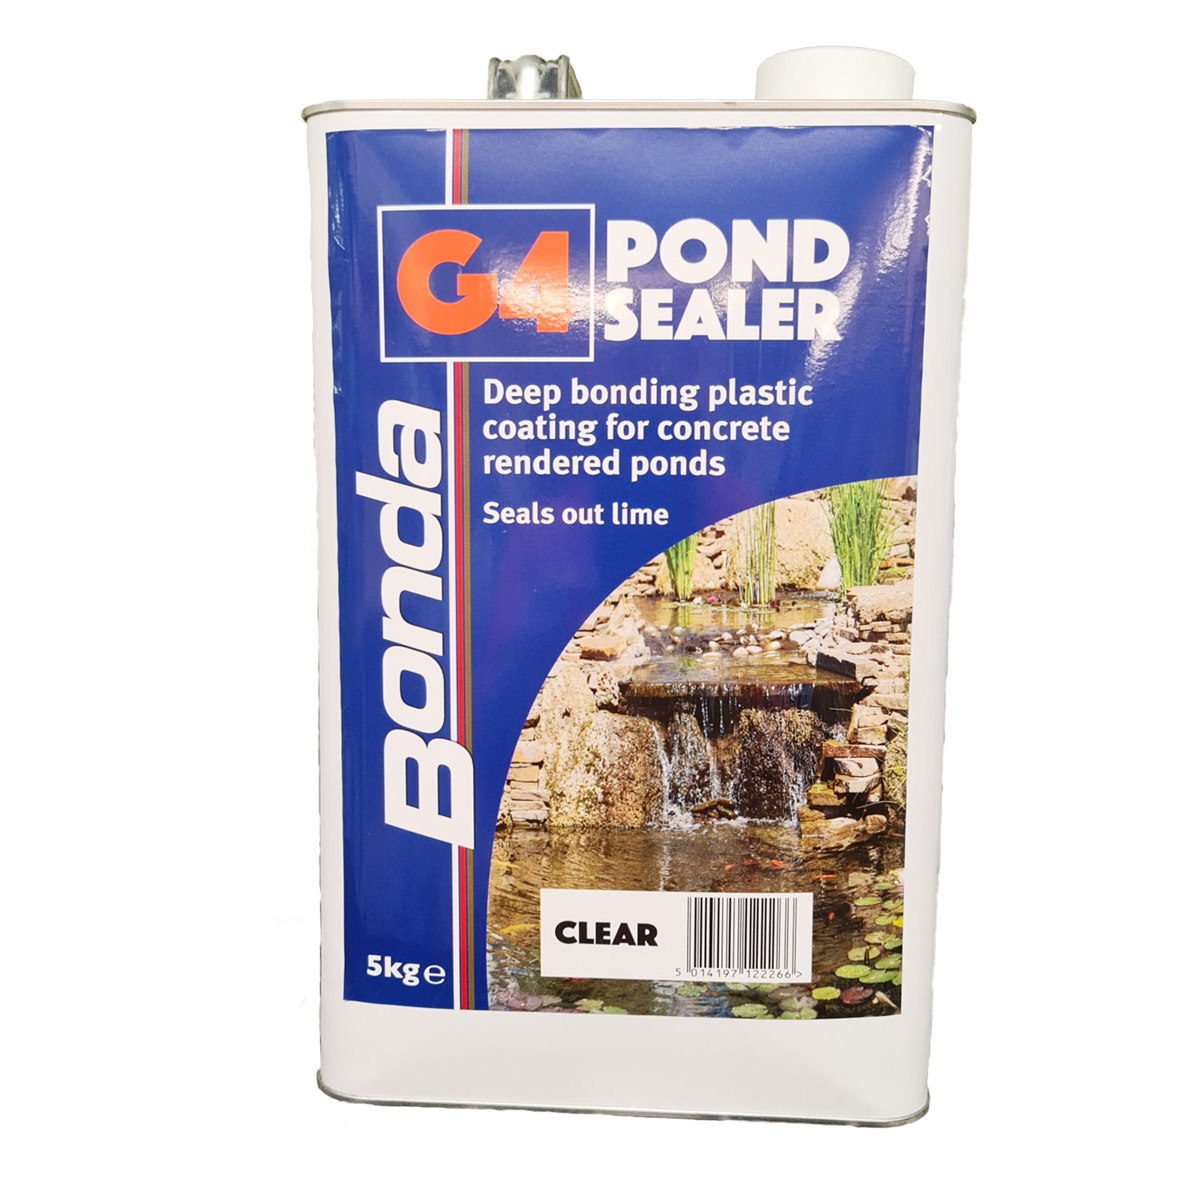 Bonda G4 Pond Sealer Clear 5kg